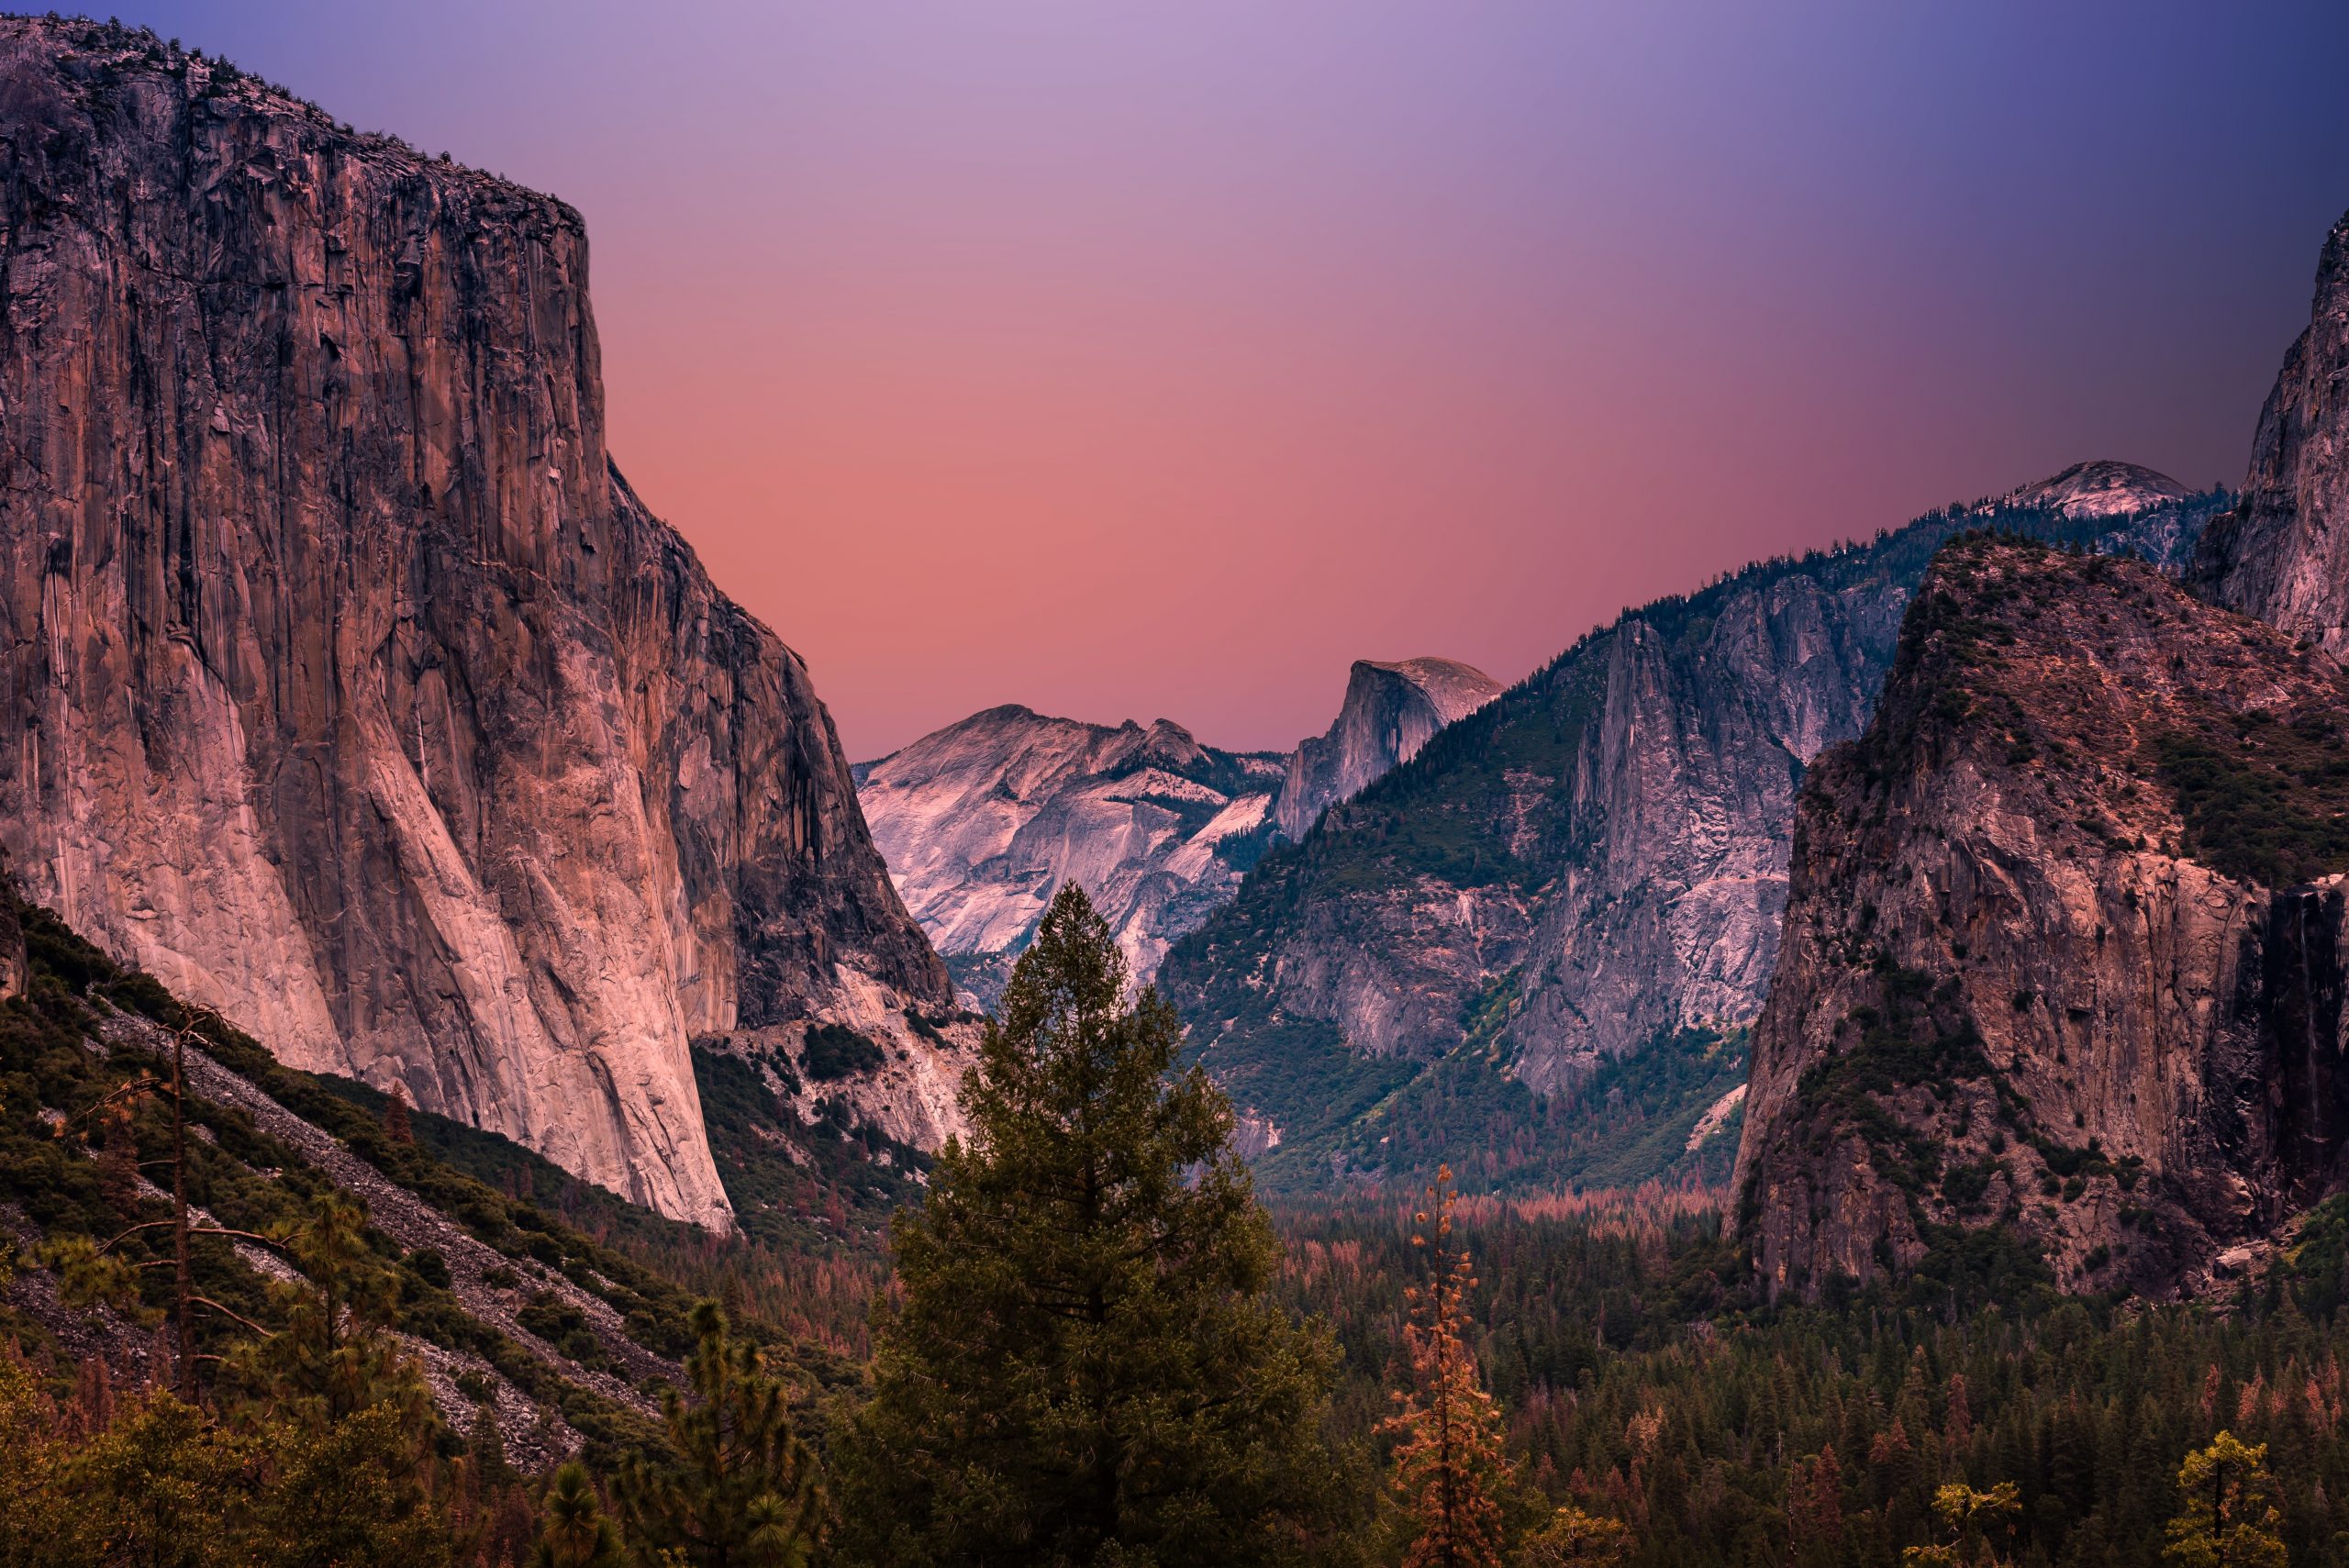 Yosemite Valley at sunset